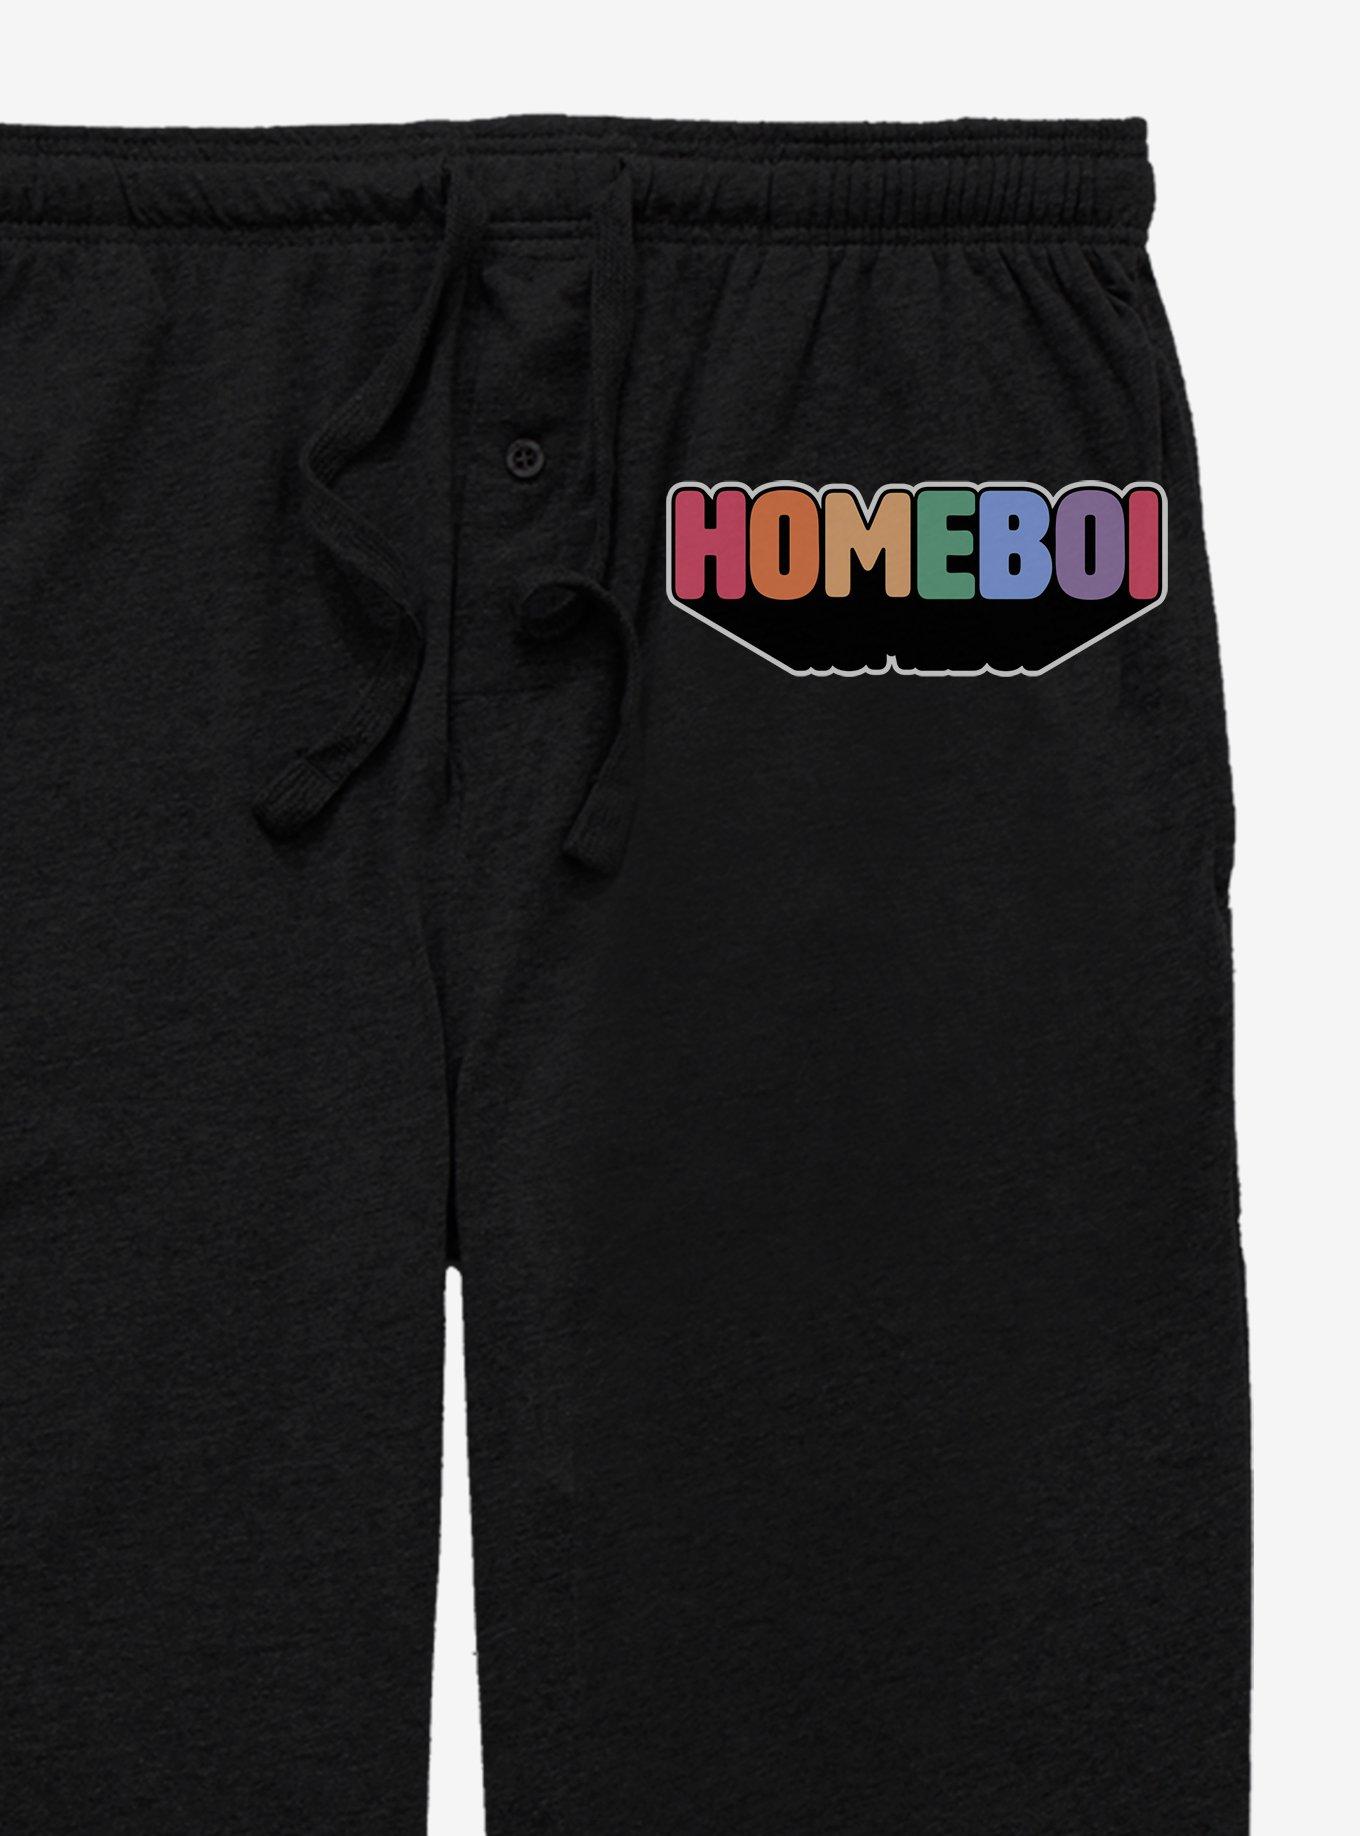 Homeboi Pajama Pants, BLACK, alternate